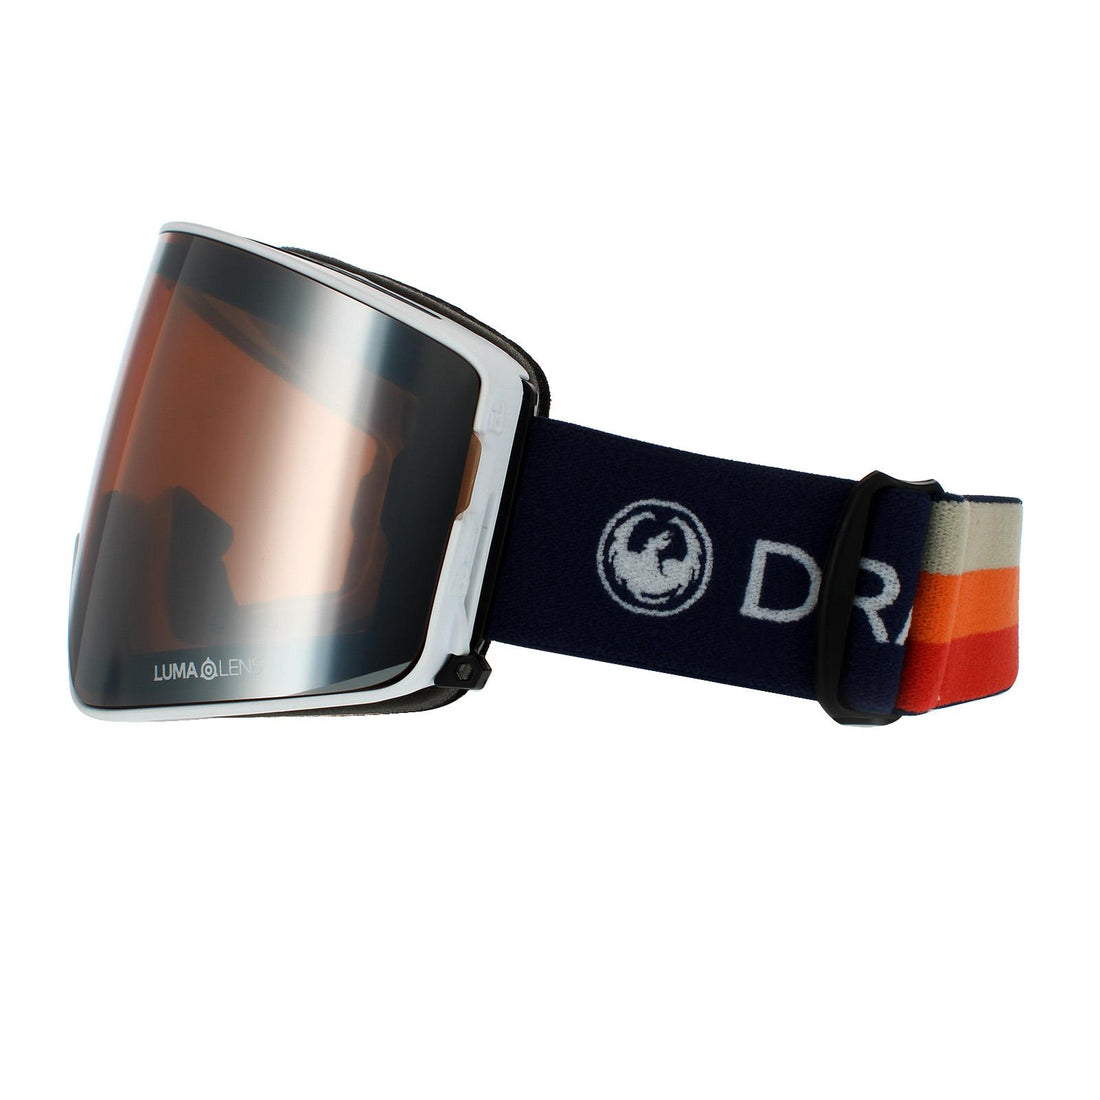 Dragon PXV2 Ski Goggles